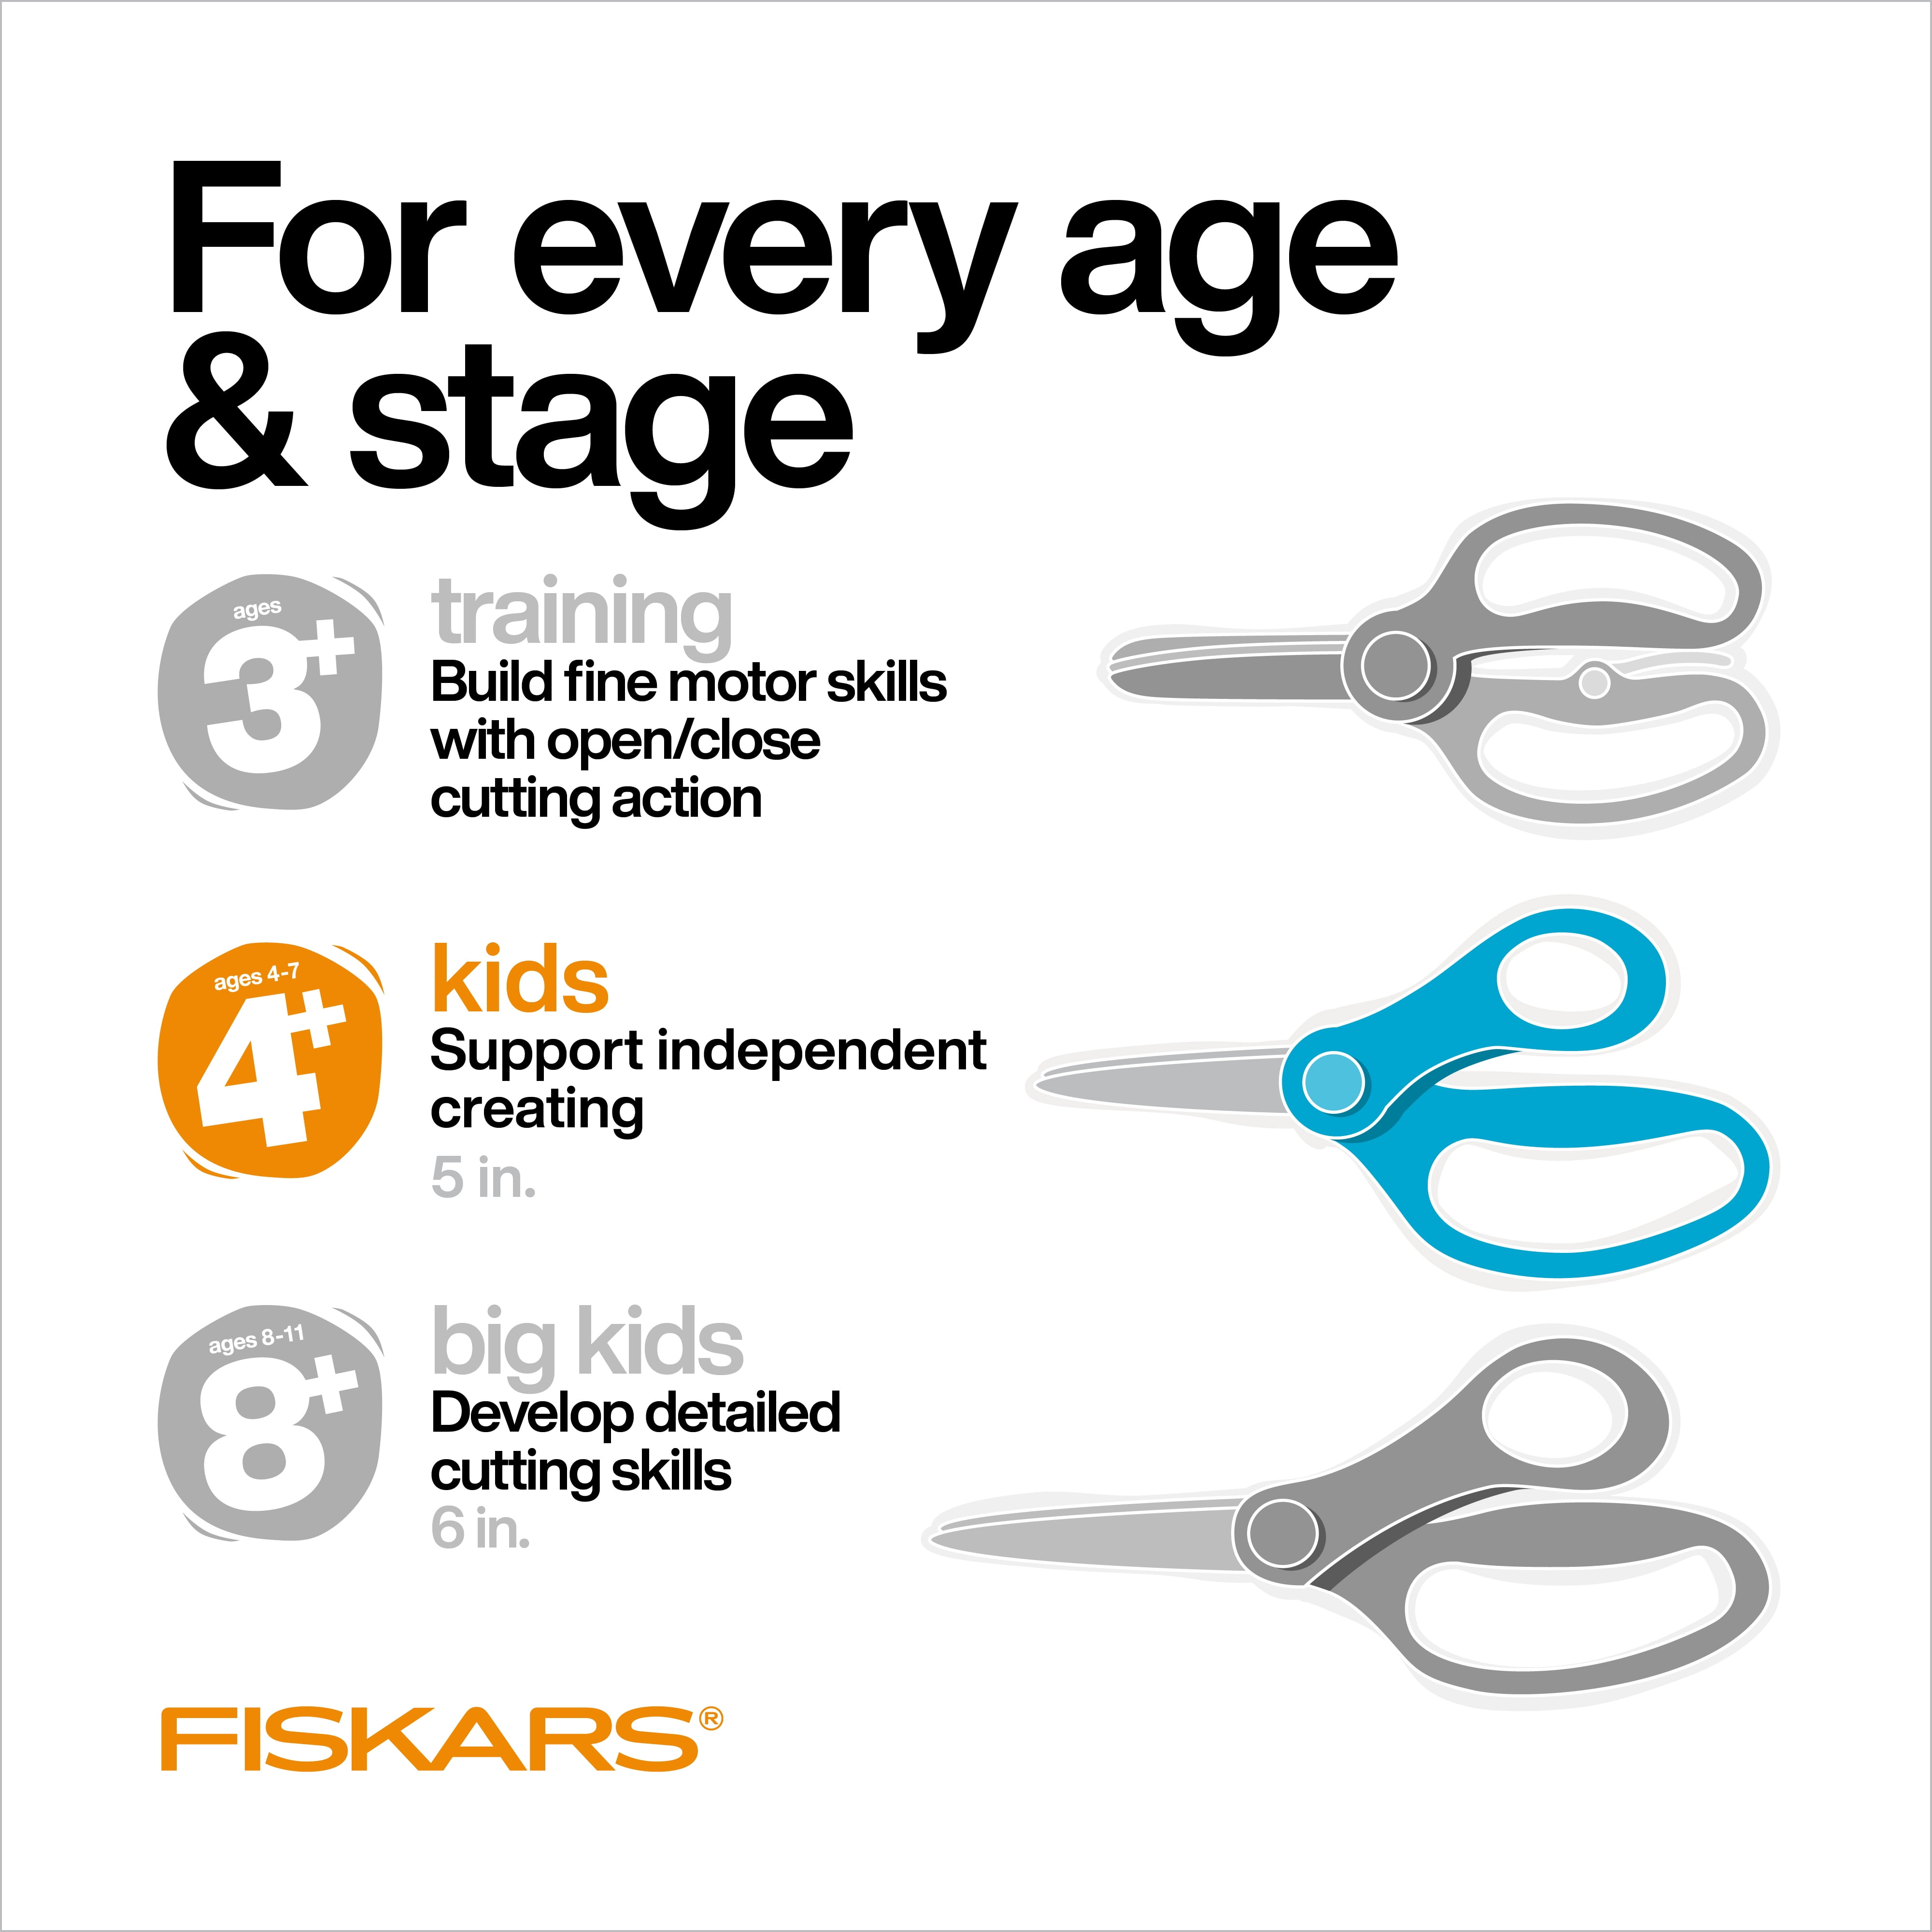 Kids Scissors,5.5 Blunt tip Scissors for Children,scissors for school  kids,Safe blade suitable for cutting paper handicraft painting  school,blue-3